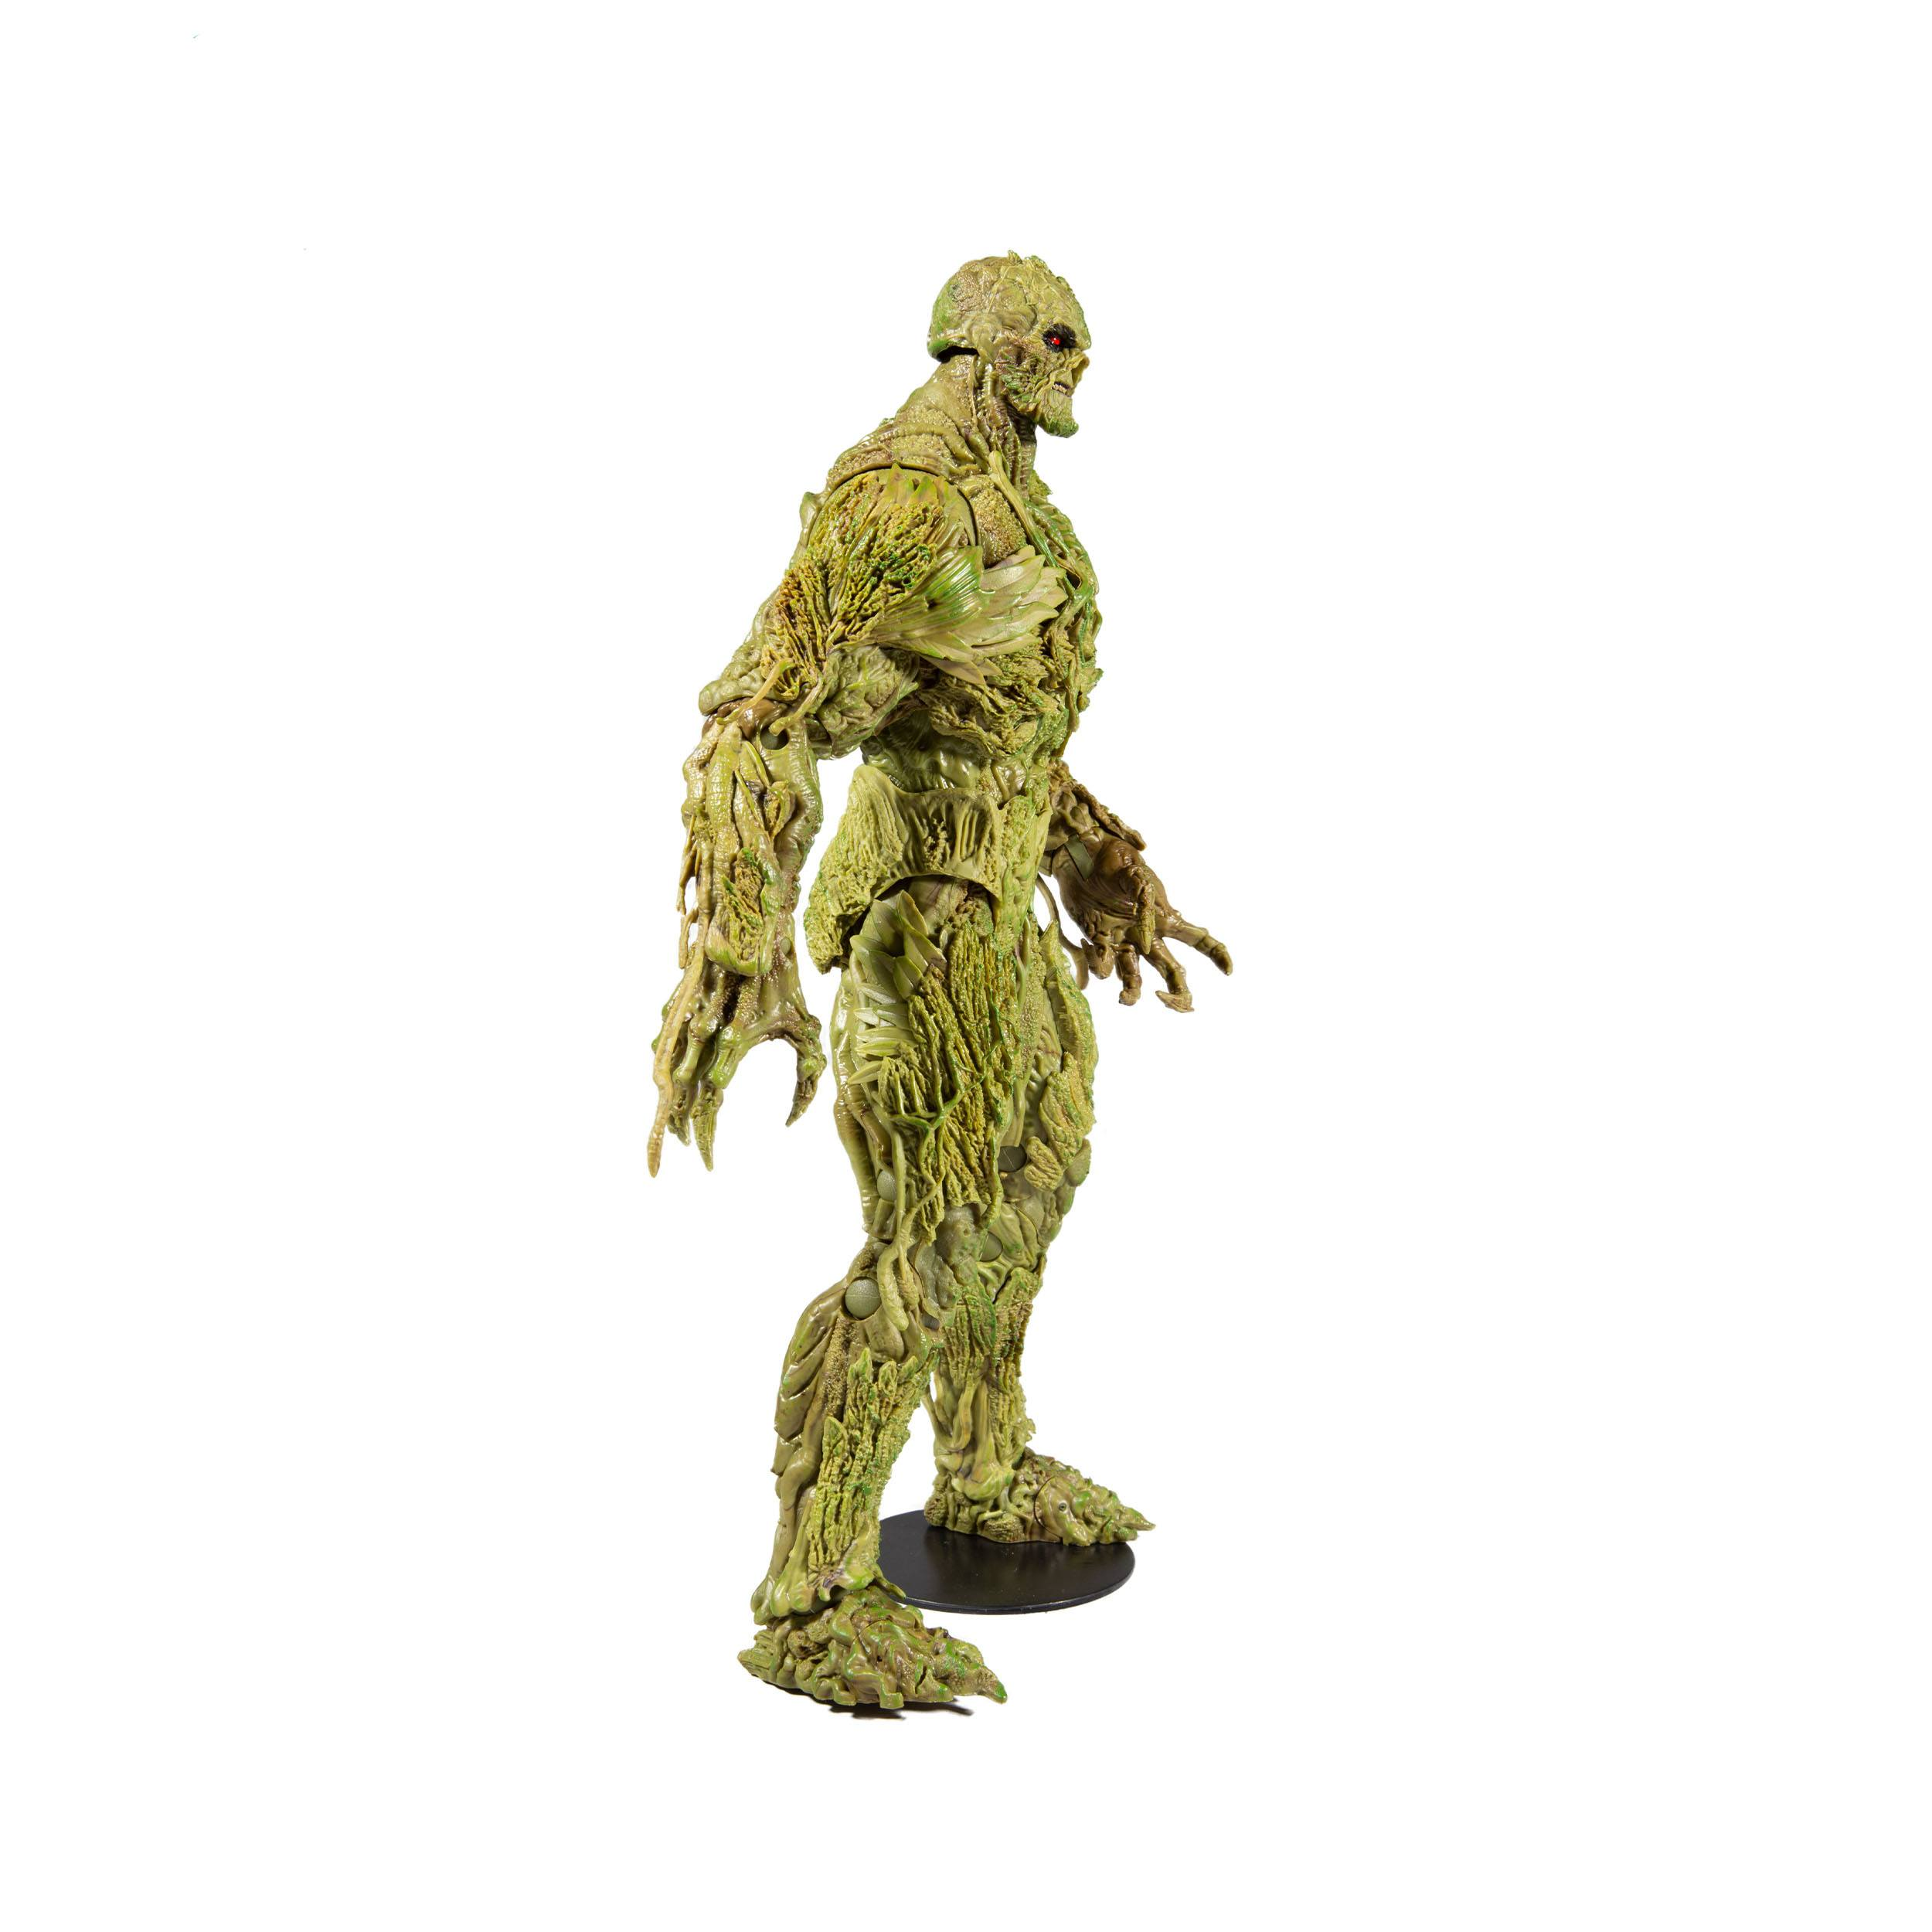 Multiverse TOYS MCFARLANE Swamp cm Figur: DC Action Thing Actionfigur 30 Deluxe